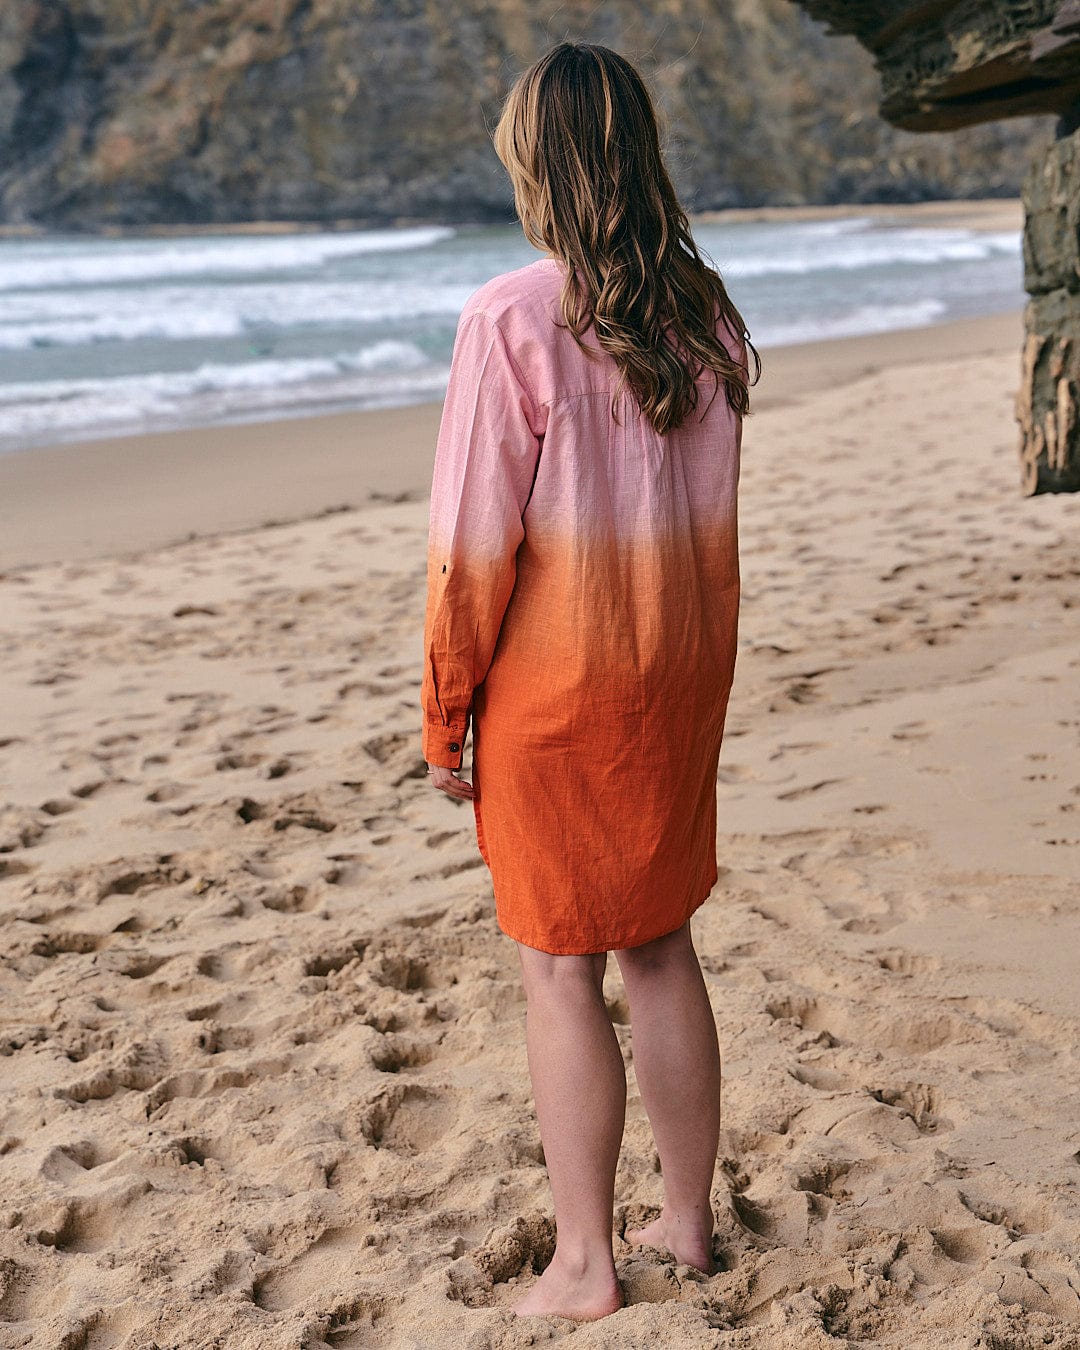 A woman standing on the beach in a Saltrock Manina - Womens Dip Die Beach Shirt - Orange dress.